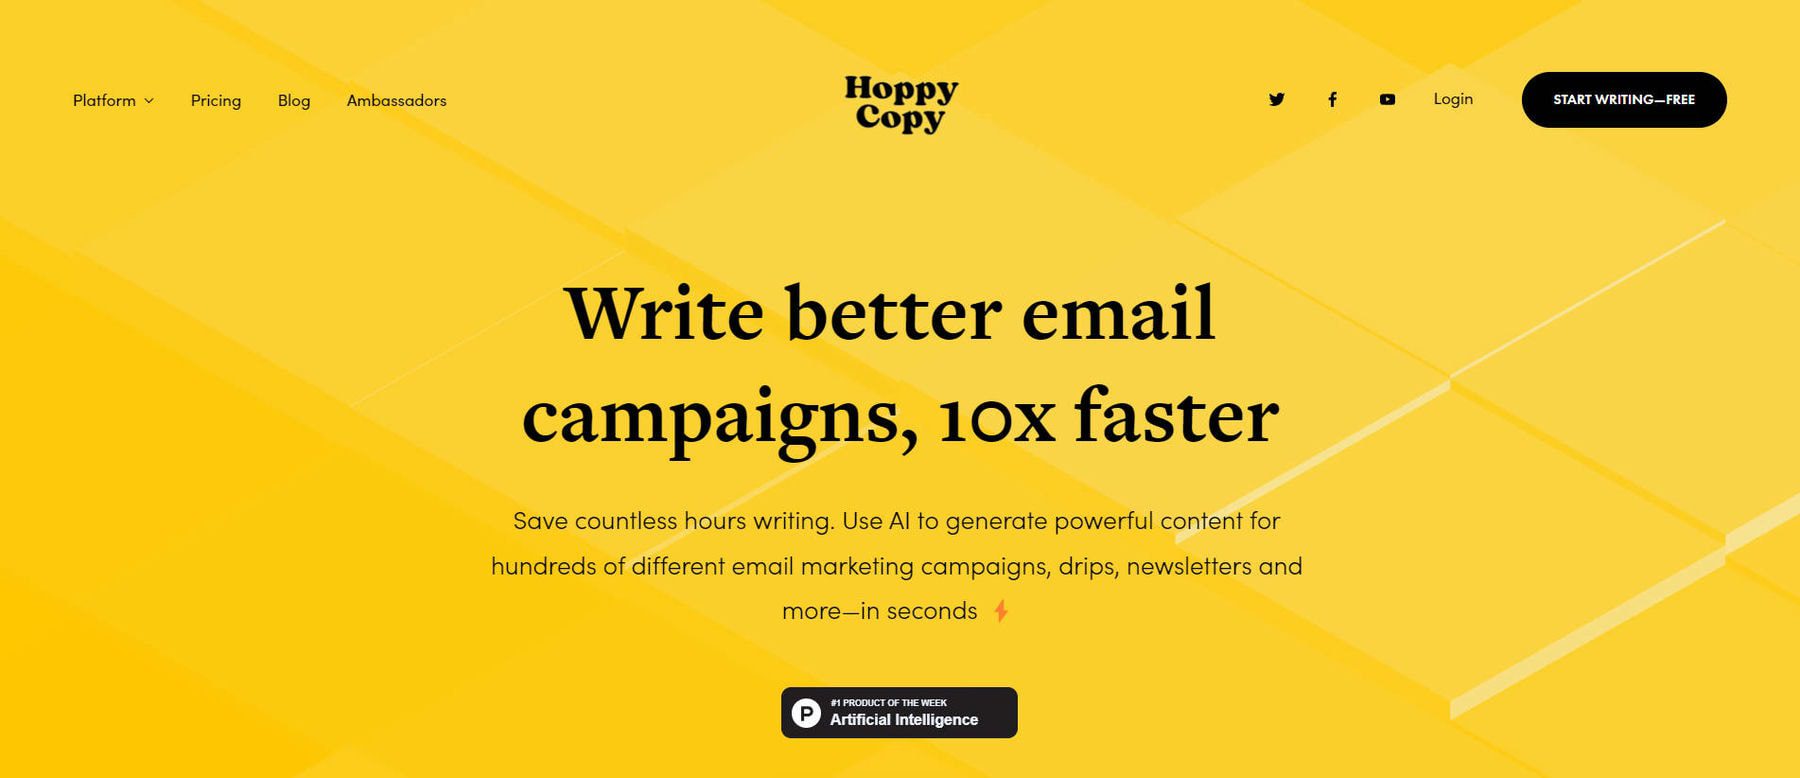 Hoppy Copy - Homepage July 2023